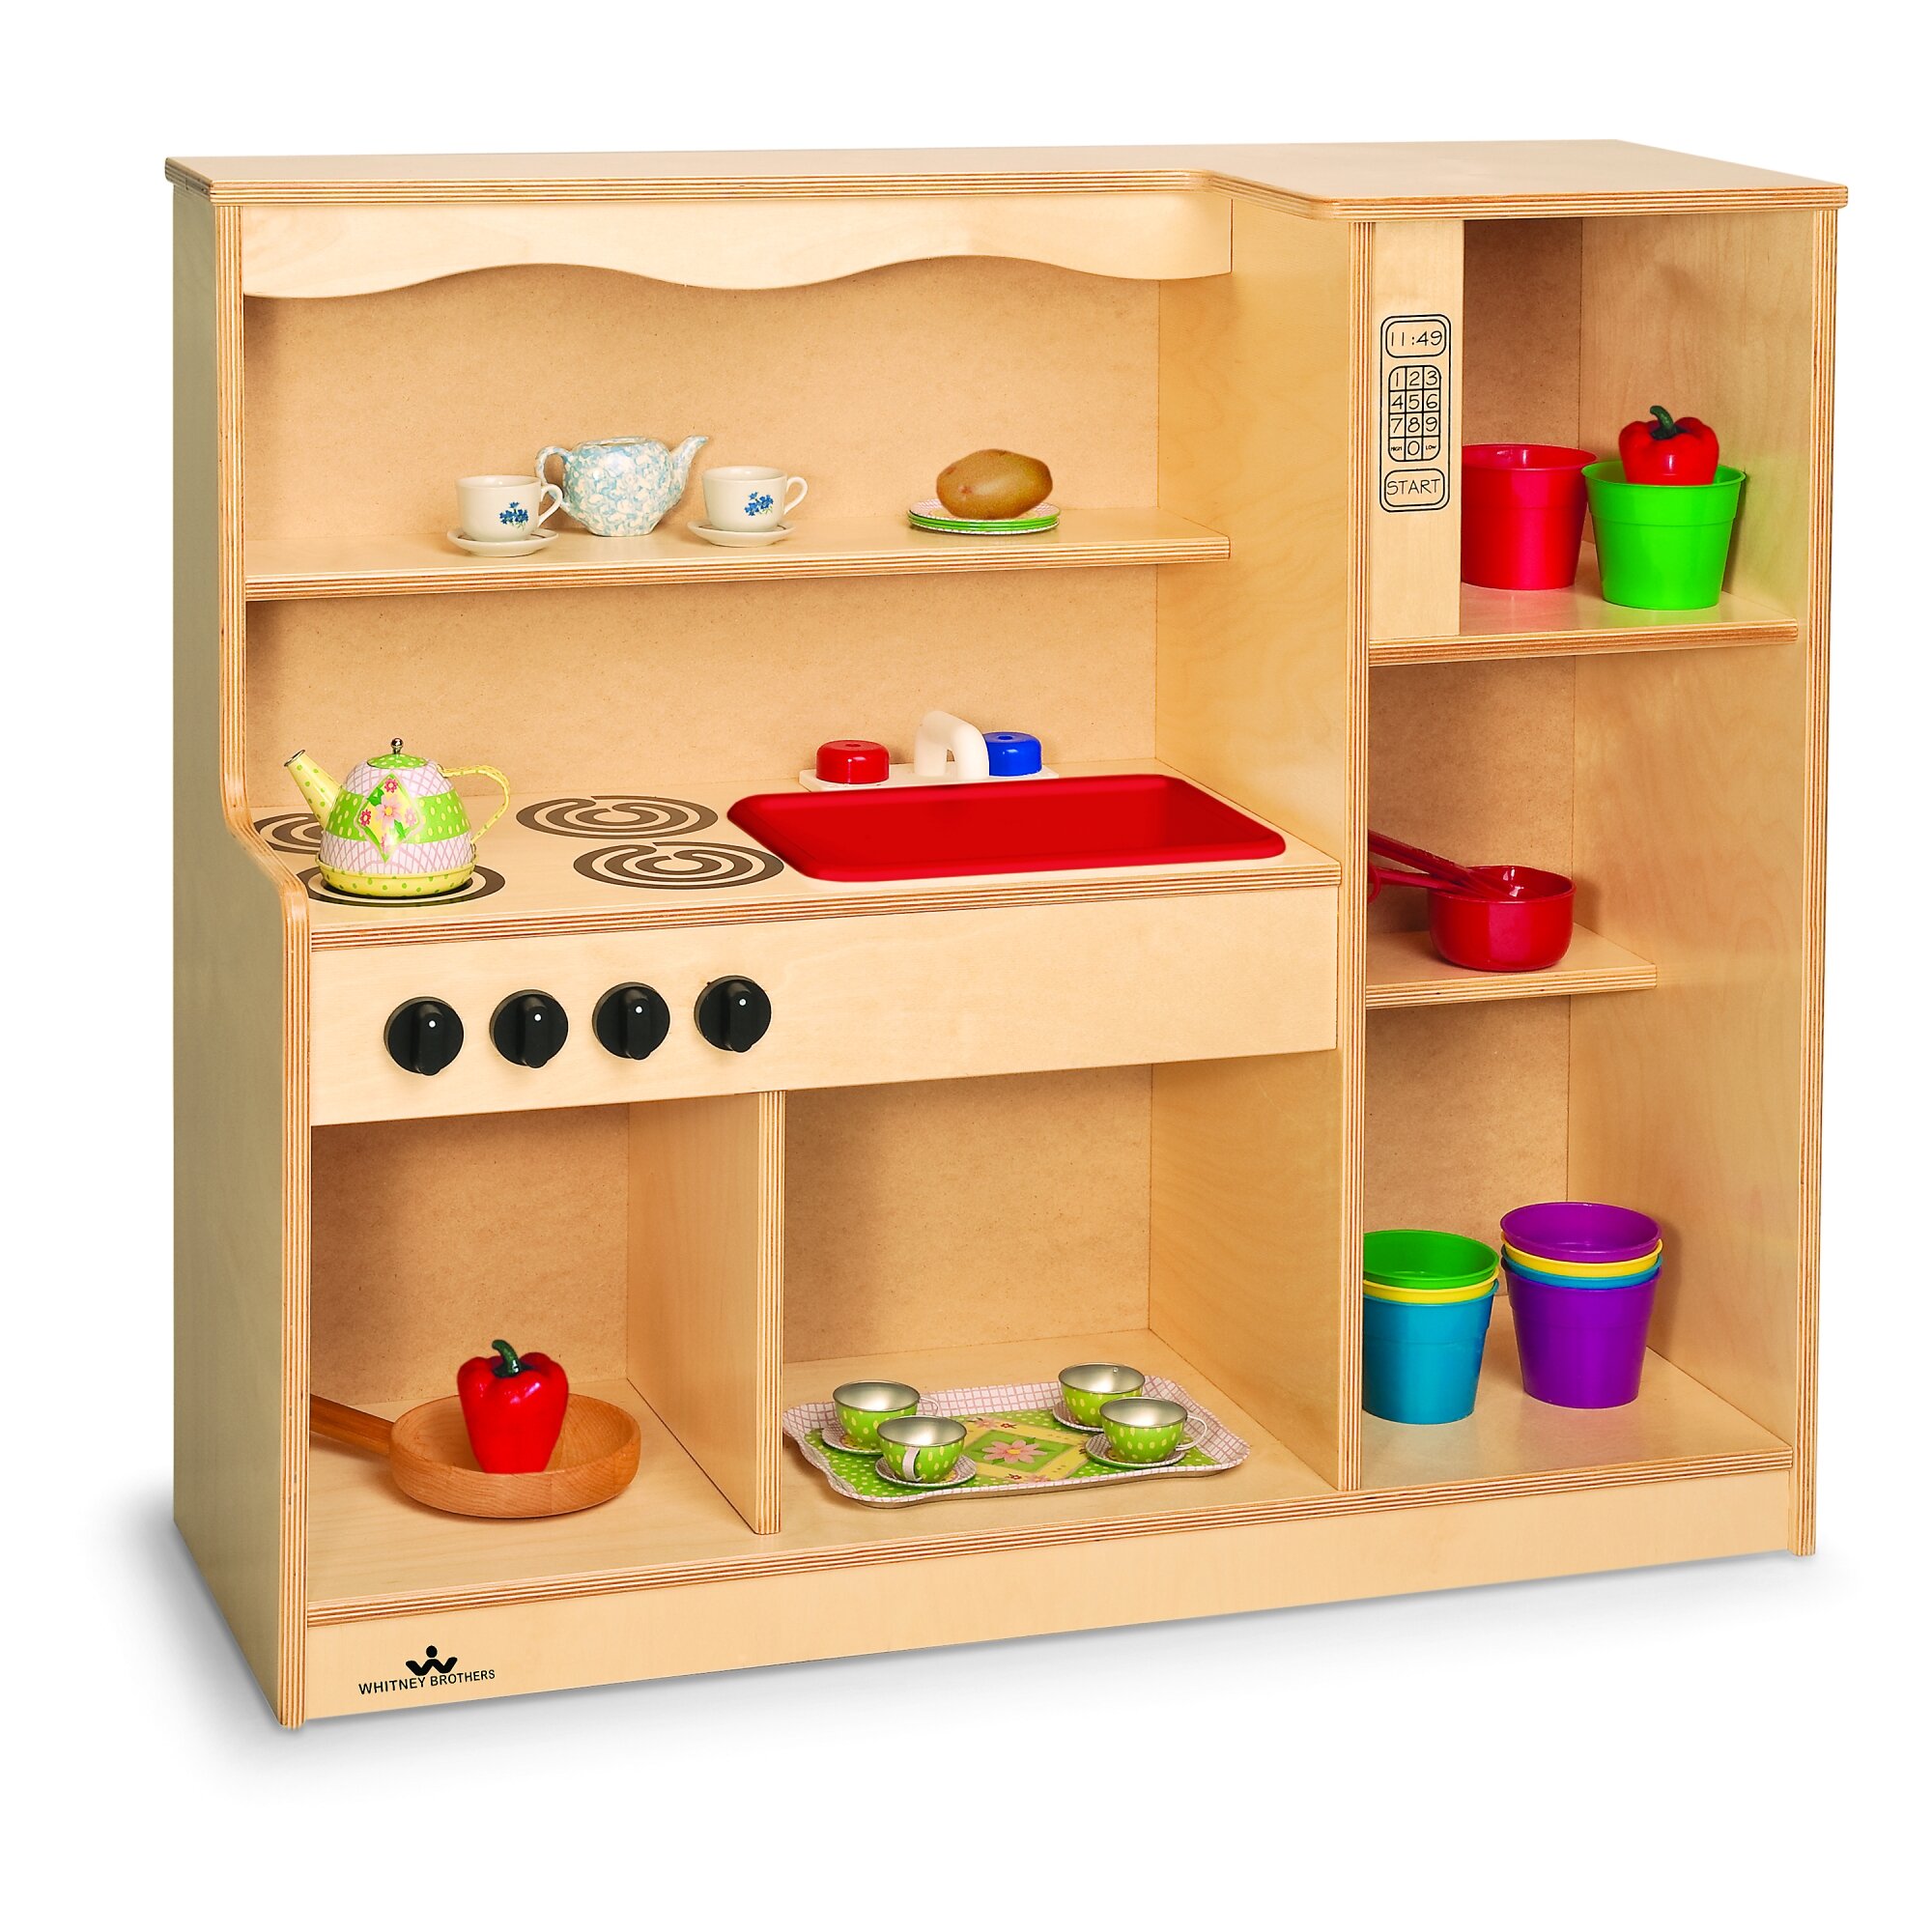 preschool kitchen sets